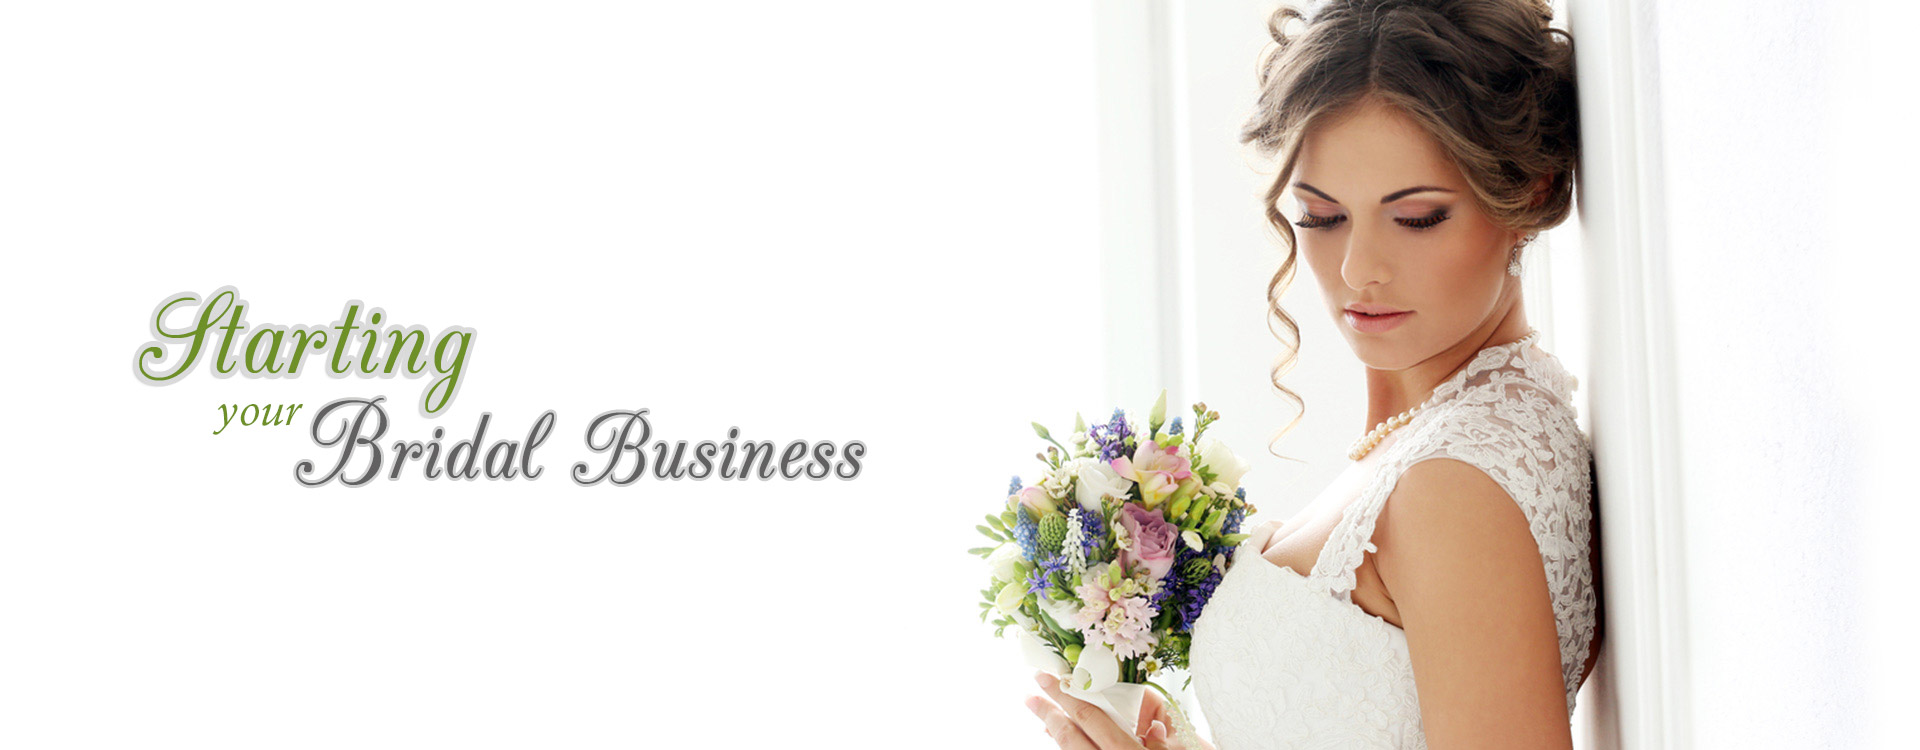 bridal business financial advice